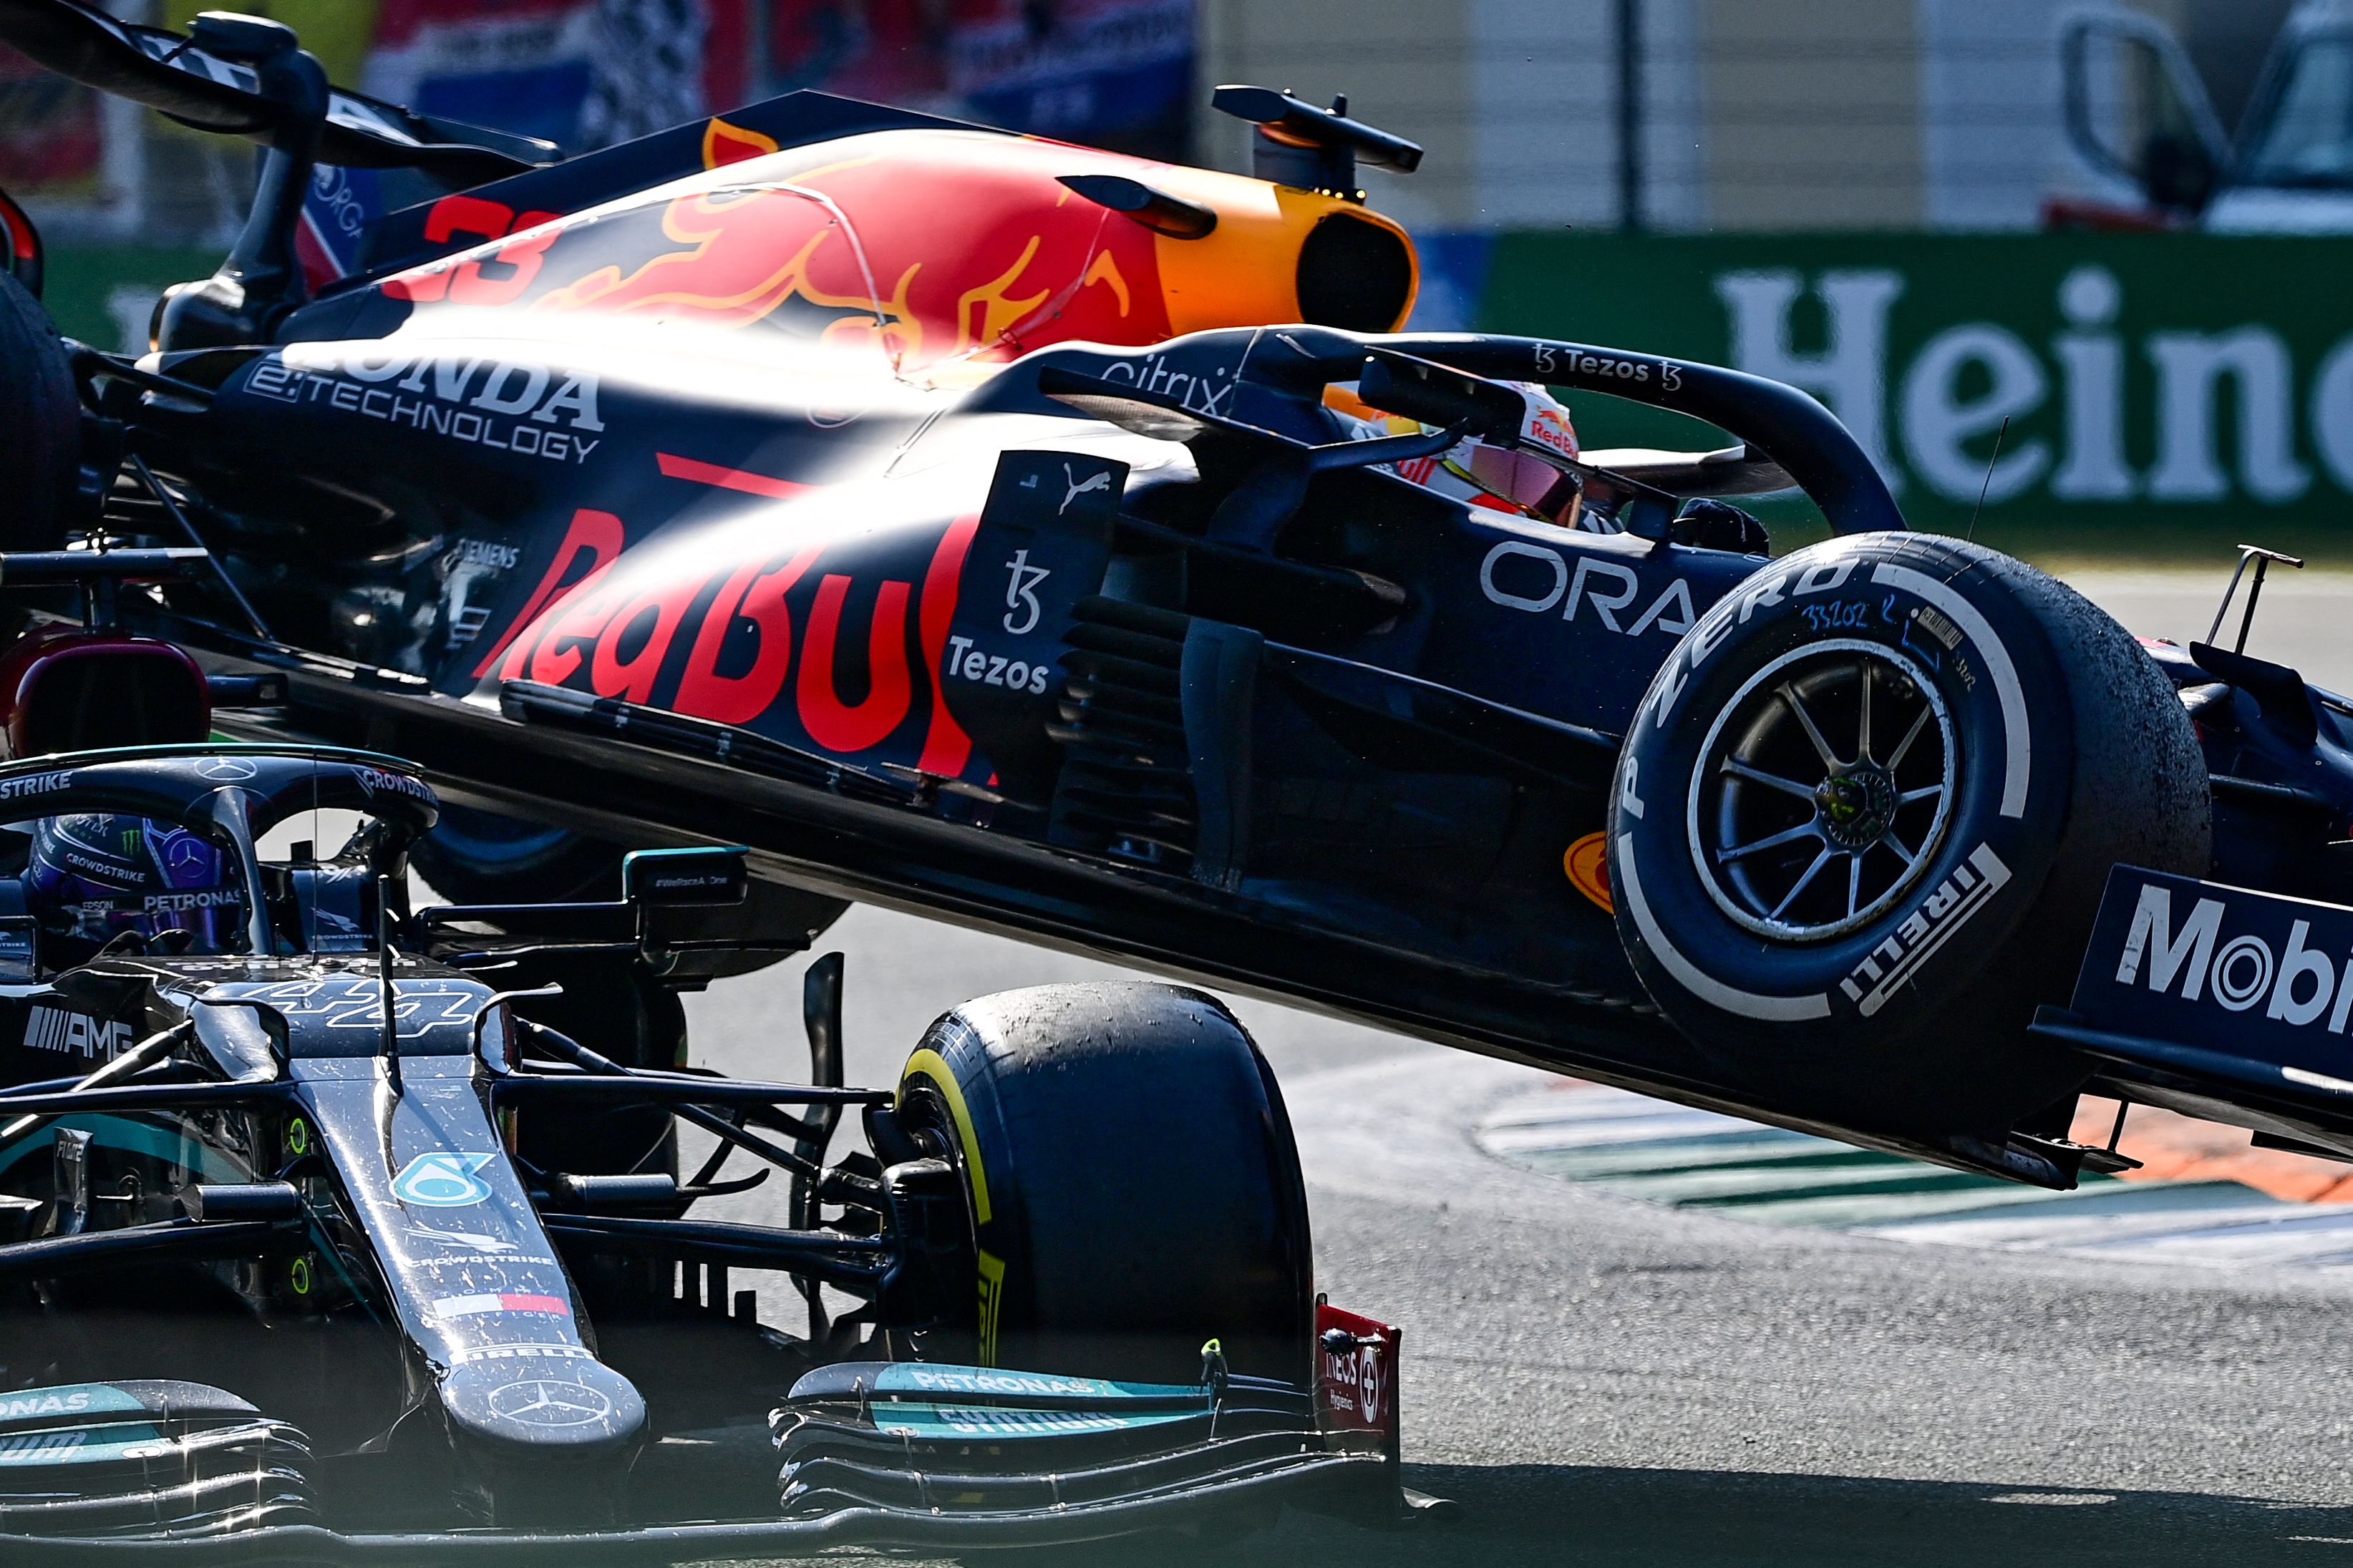 Lewis Hamilton escaped injury following the dramatic crash at the Italian GP